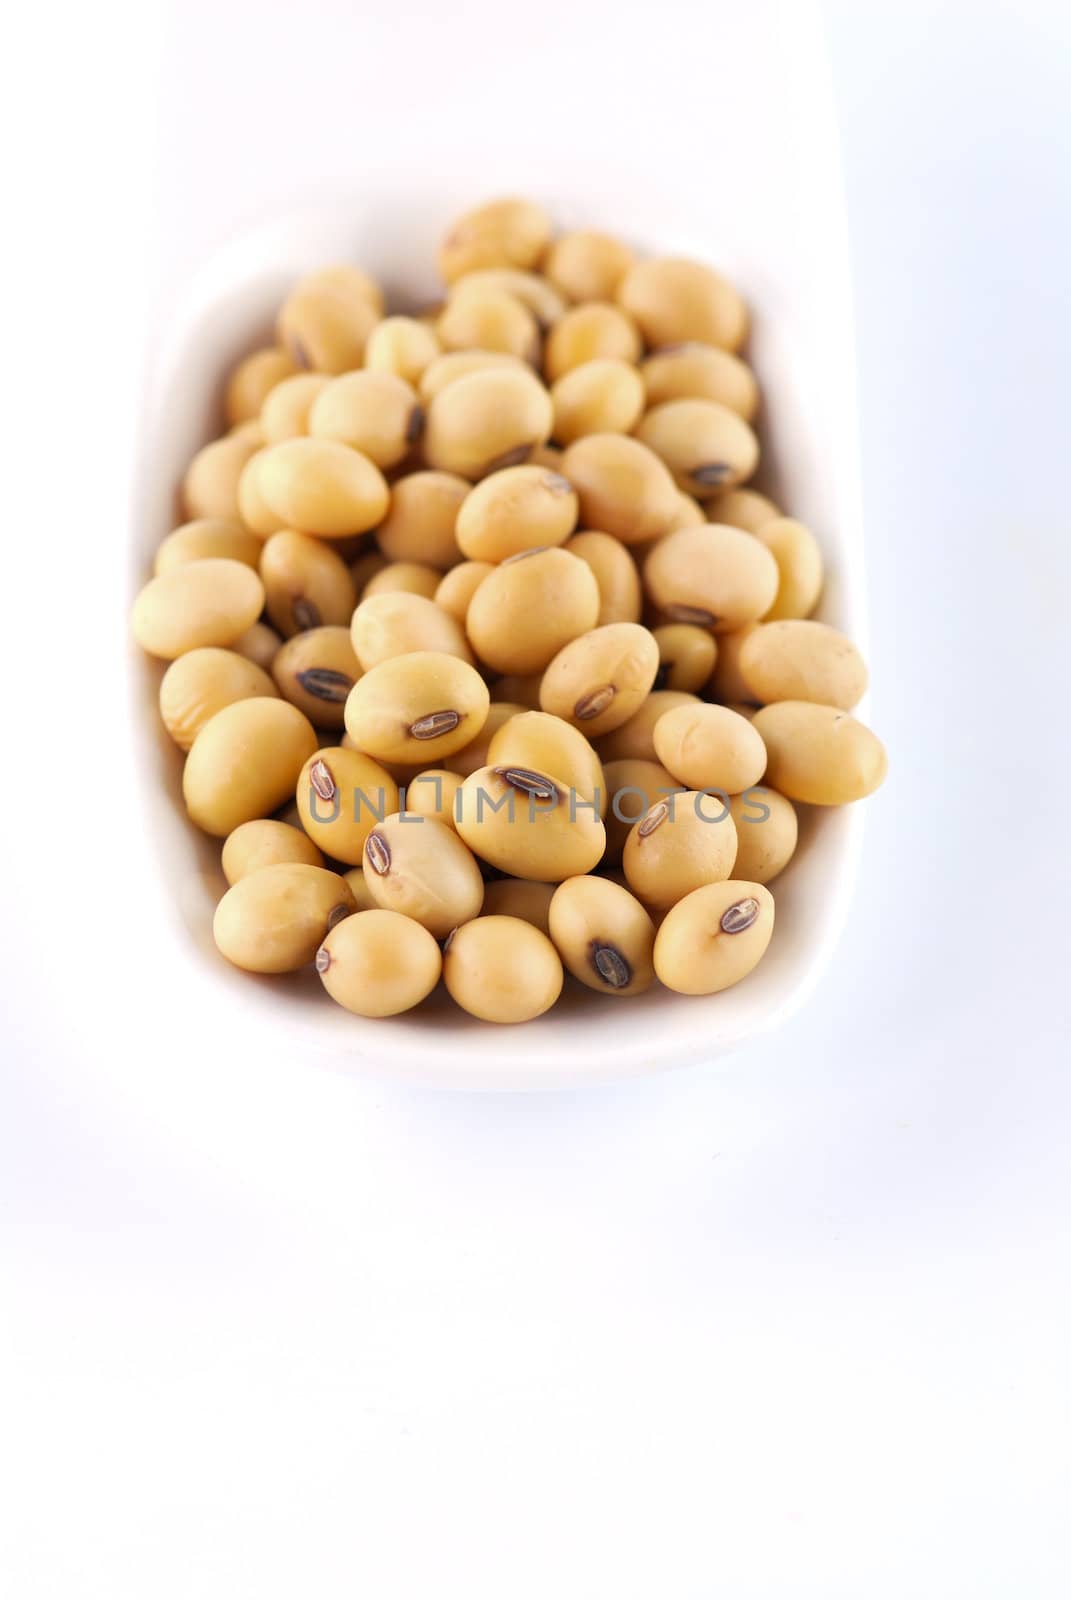 soybean by teen00000